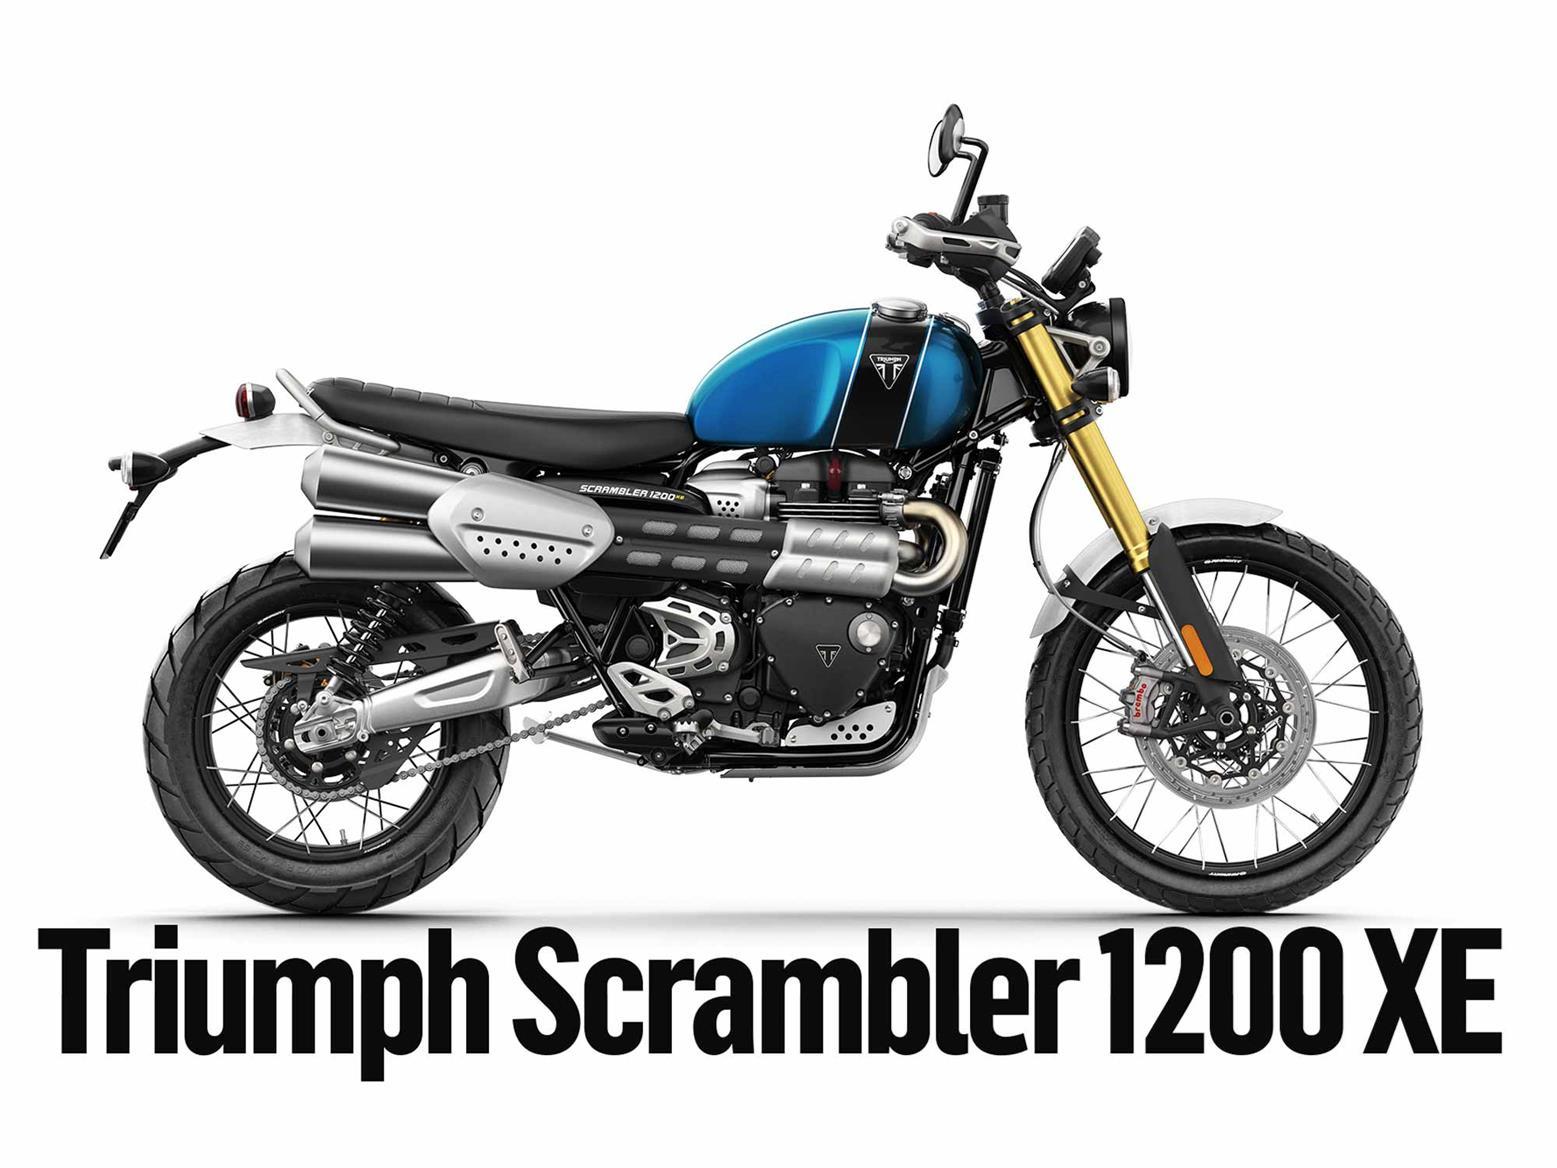 Read MCN's detailed Triumph Scrambler 1200 XE long-term test review here